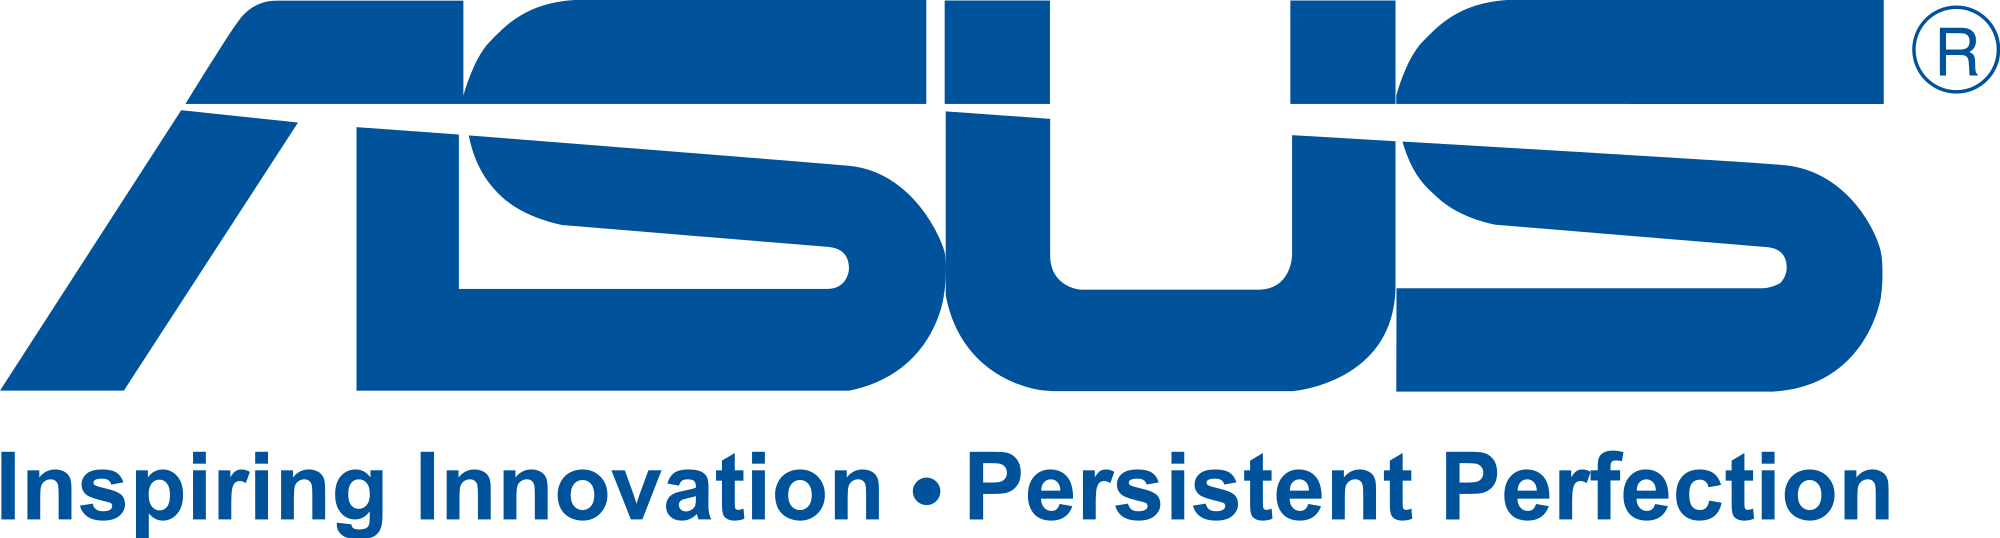 Asus Logo Inspiring Innovation Persistent Perfection